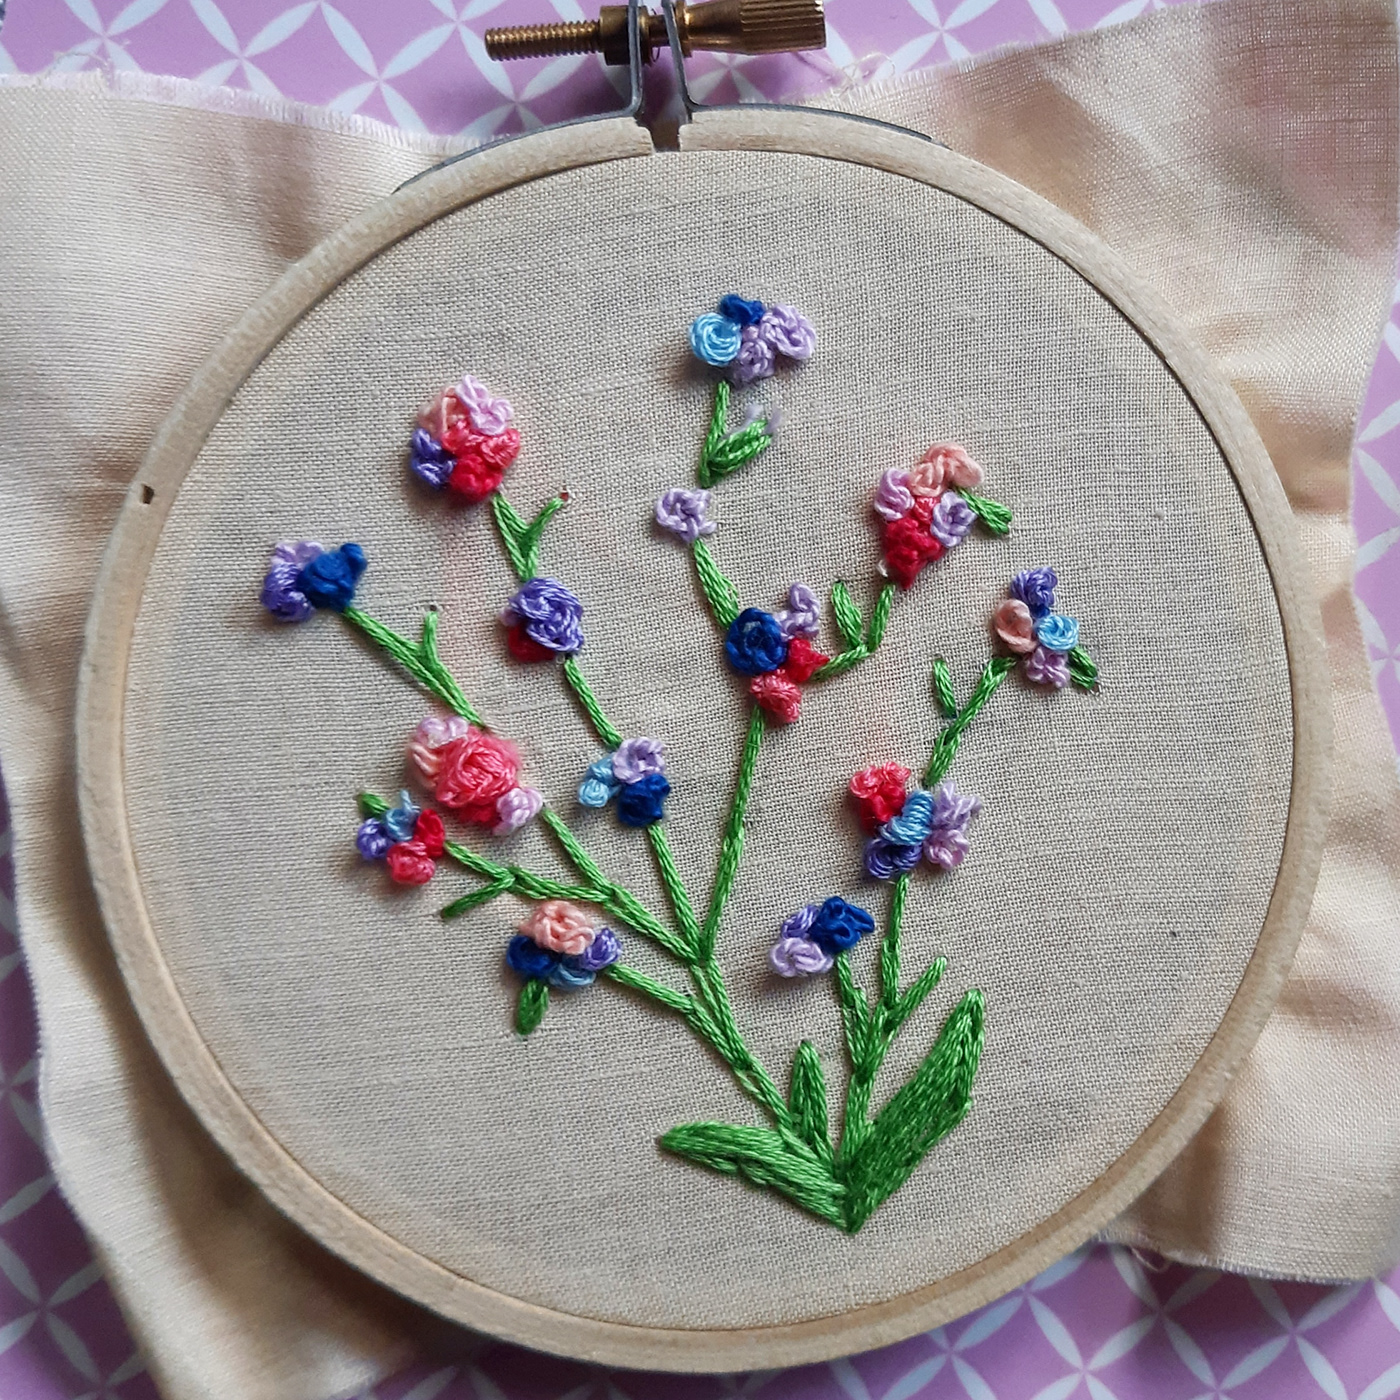 art beginner crafts   Embroidery Flowers moon